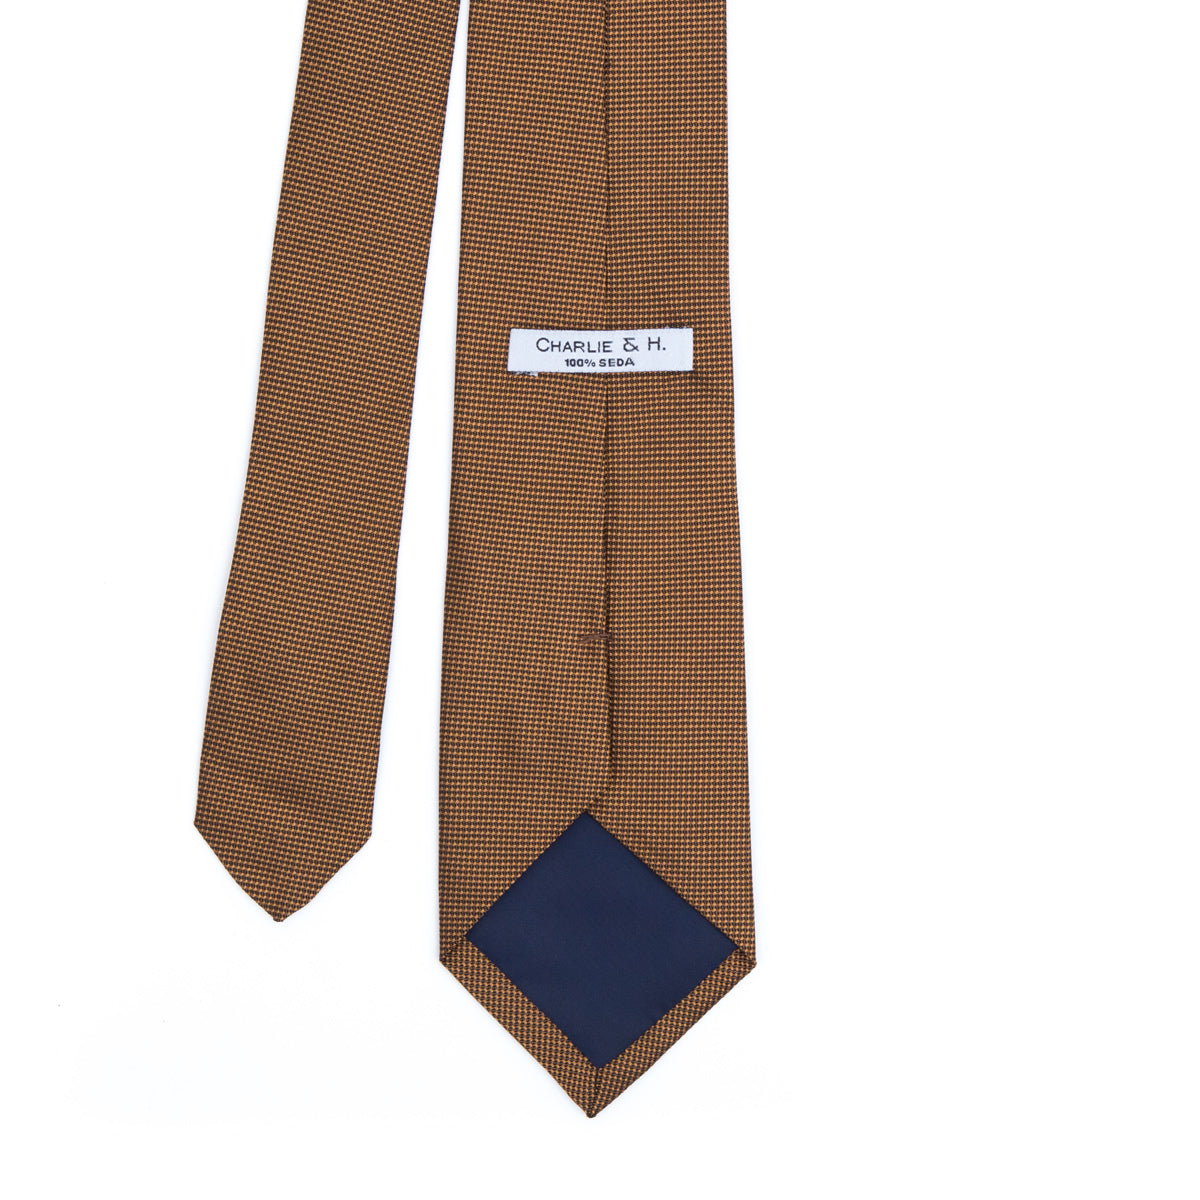 Smooth golden brown tie